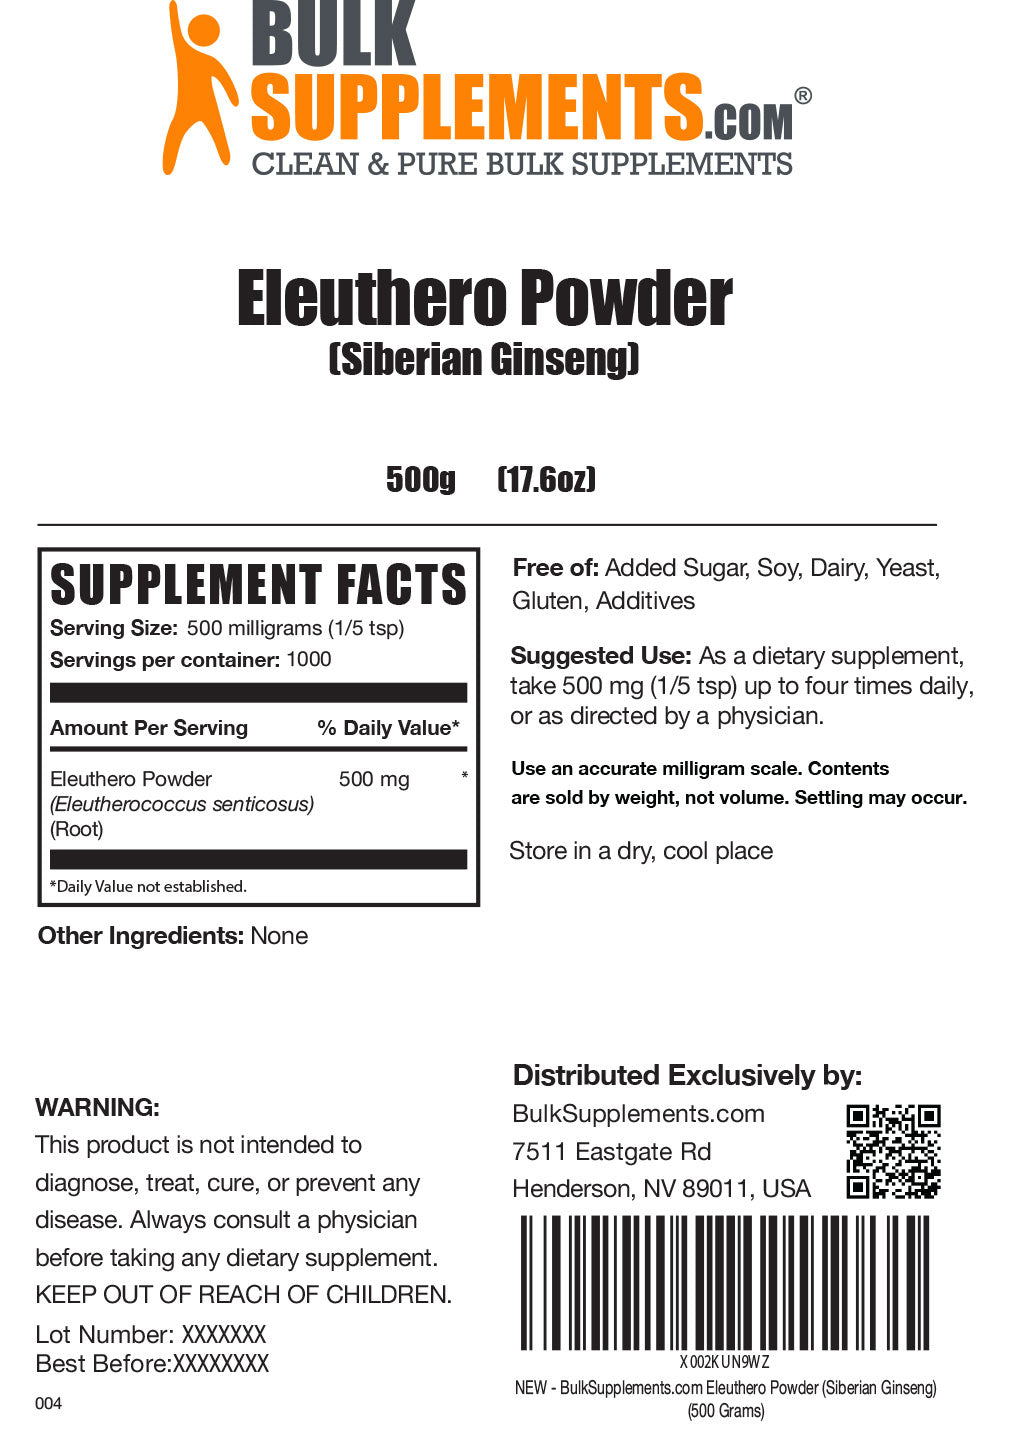 Siberian Ginseng (Eleuthero) powder label 500g